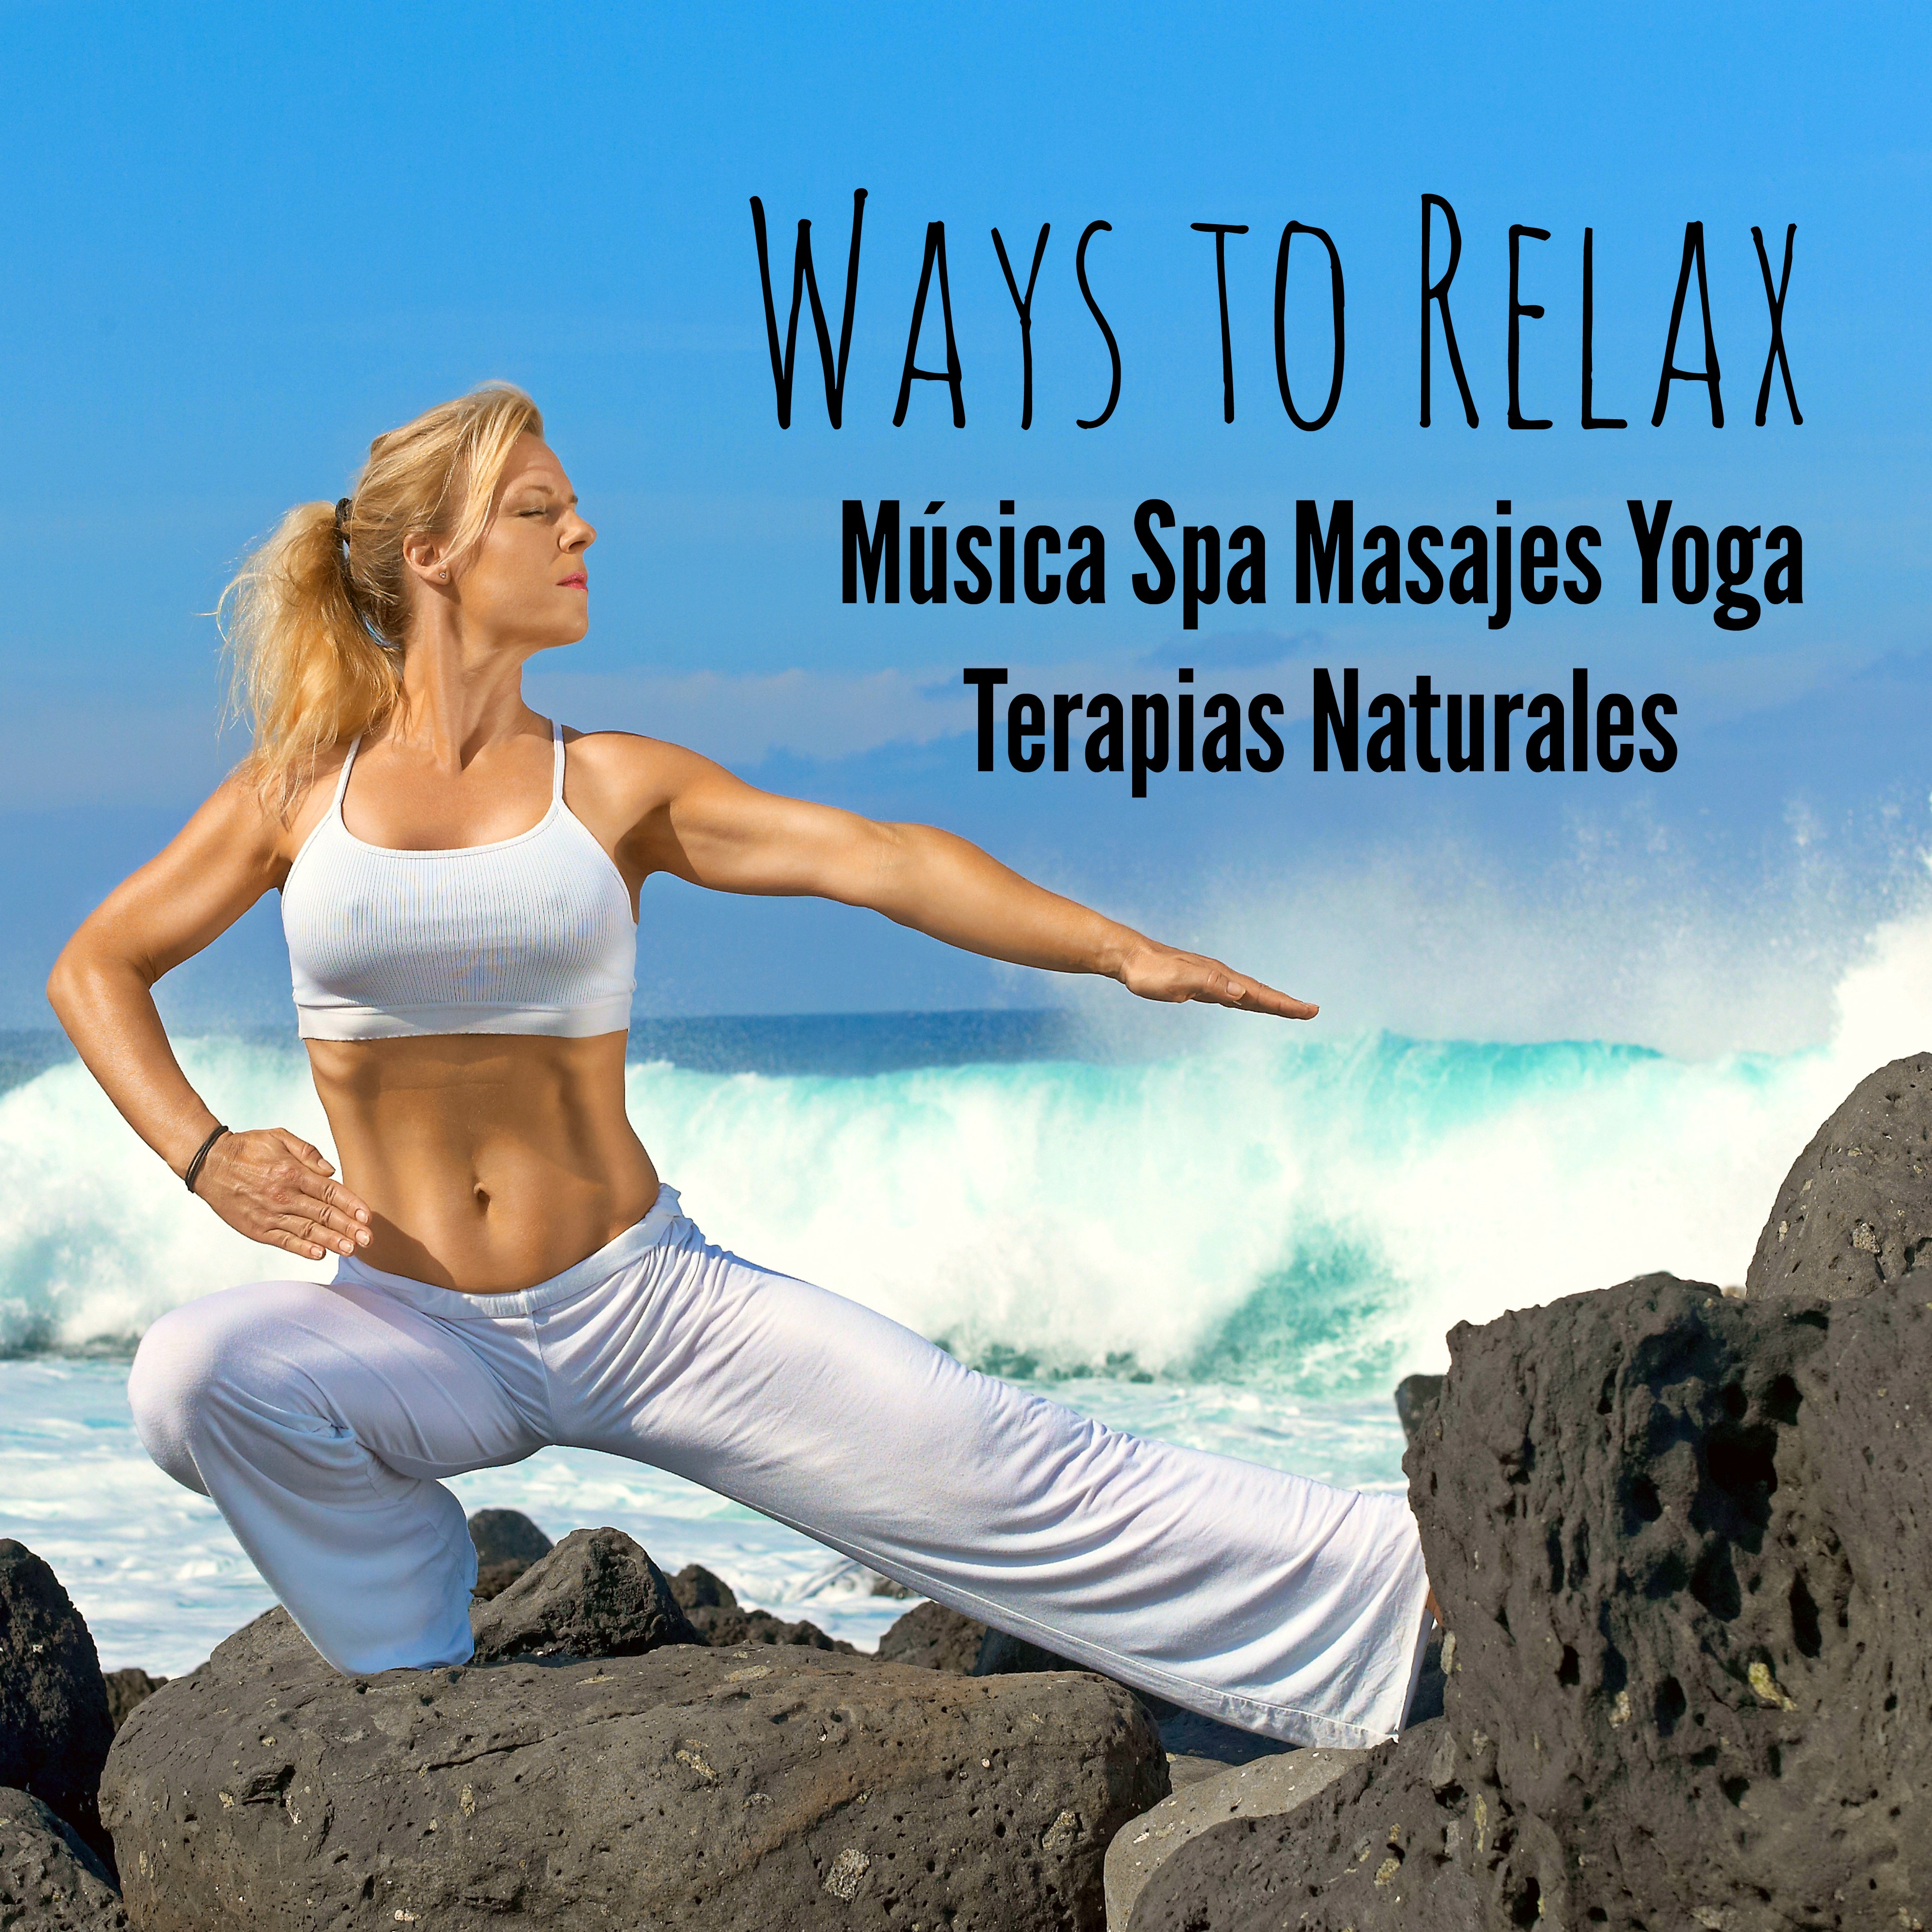 Ways to Relax - Música Spa Masajes Yoga Terapias Naturales con Sonidos Easy Listening Chill Instrumental Techno House